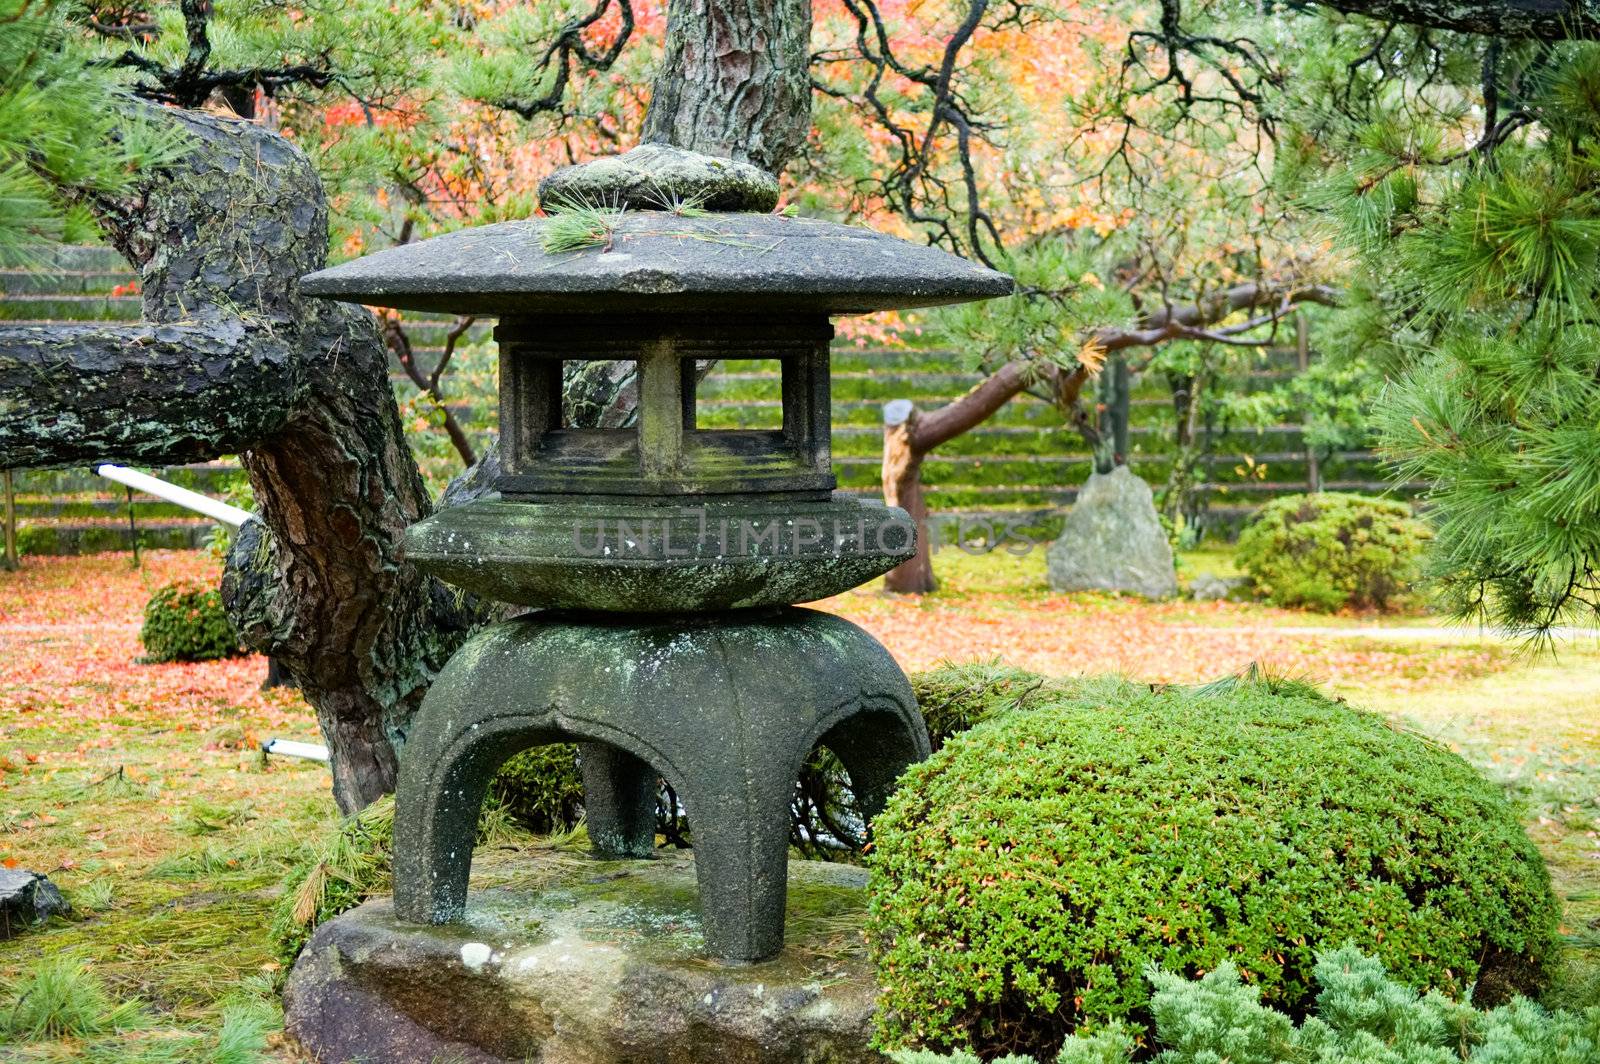 Granite lantern in the middle of wild garden